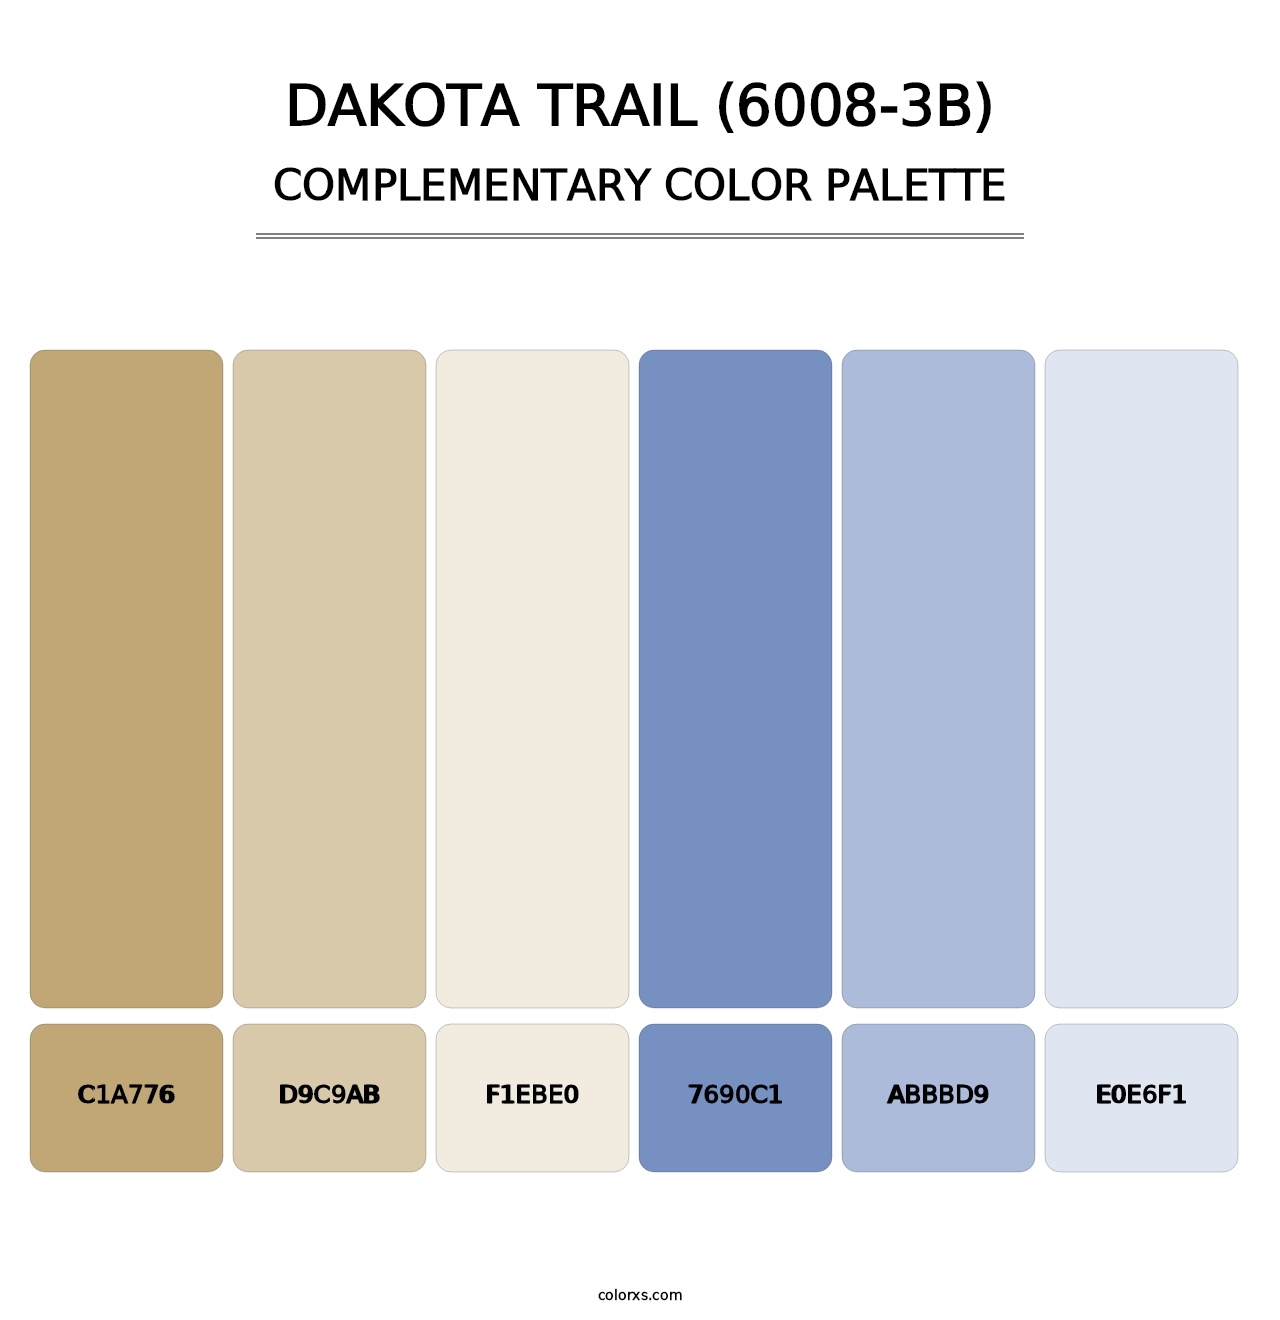 Dakota Trail (6008-3B) - Complementary Color Palette